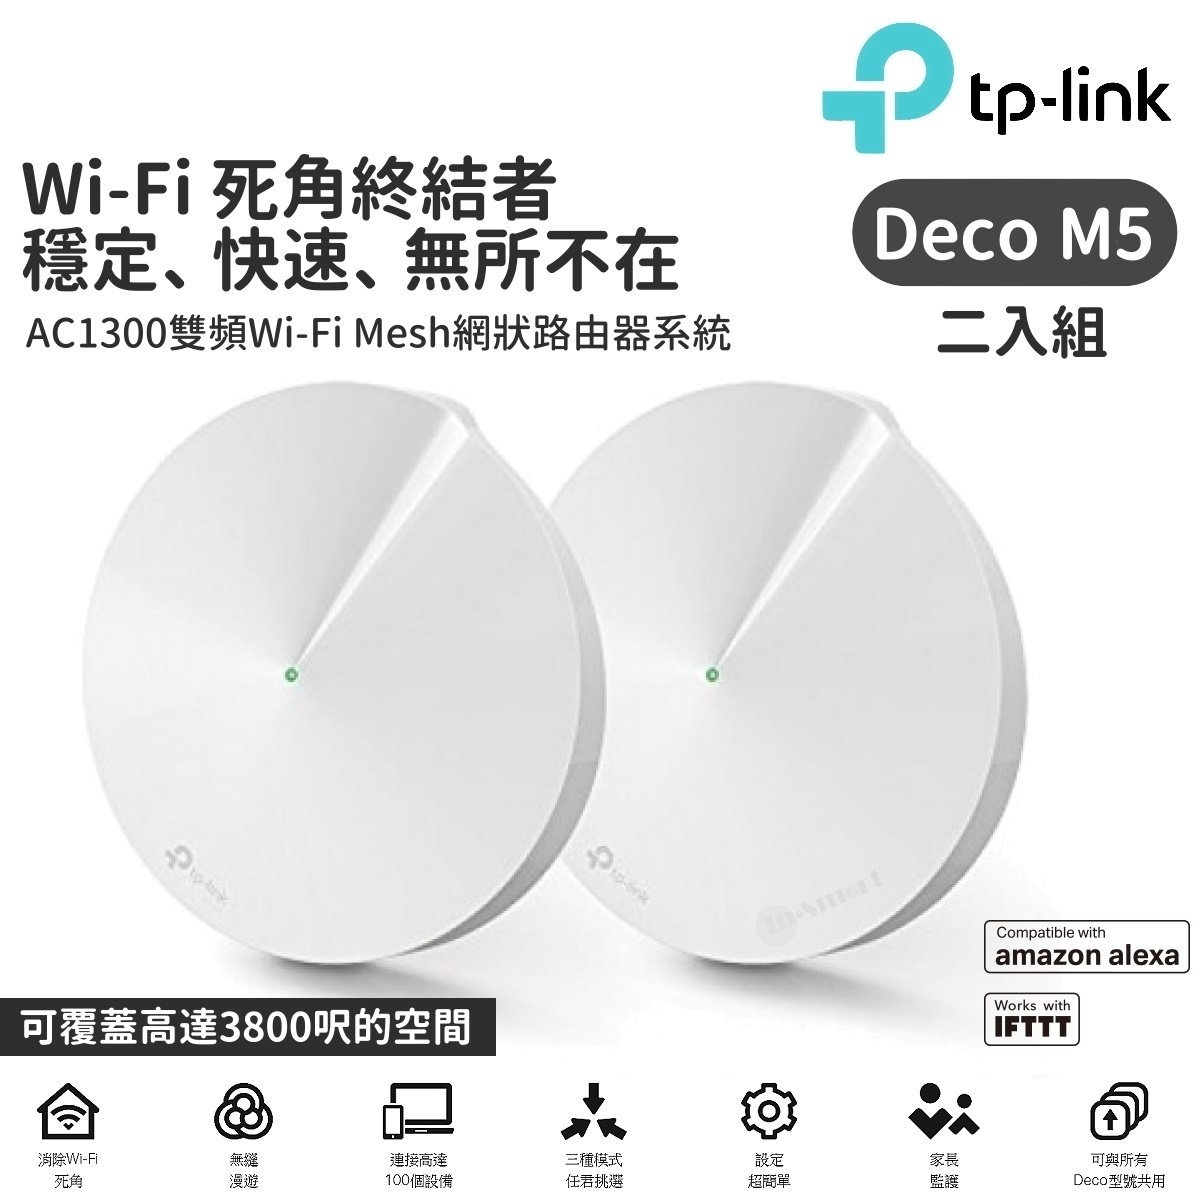 TP-Link-Deco M5 Mesh AC1300 雙頻Wi-Fi 網狀路由器In-Smart 網上購物